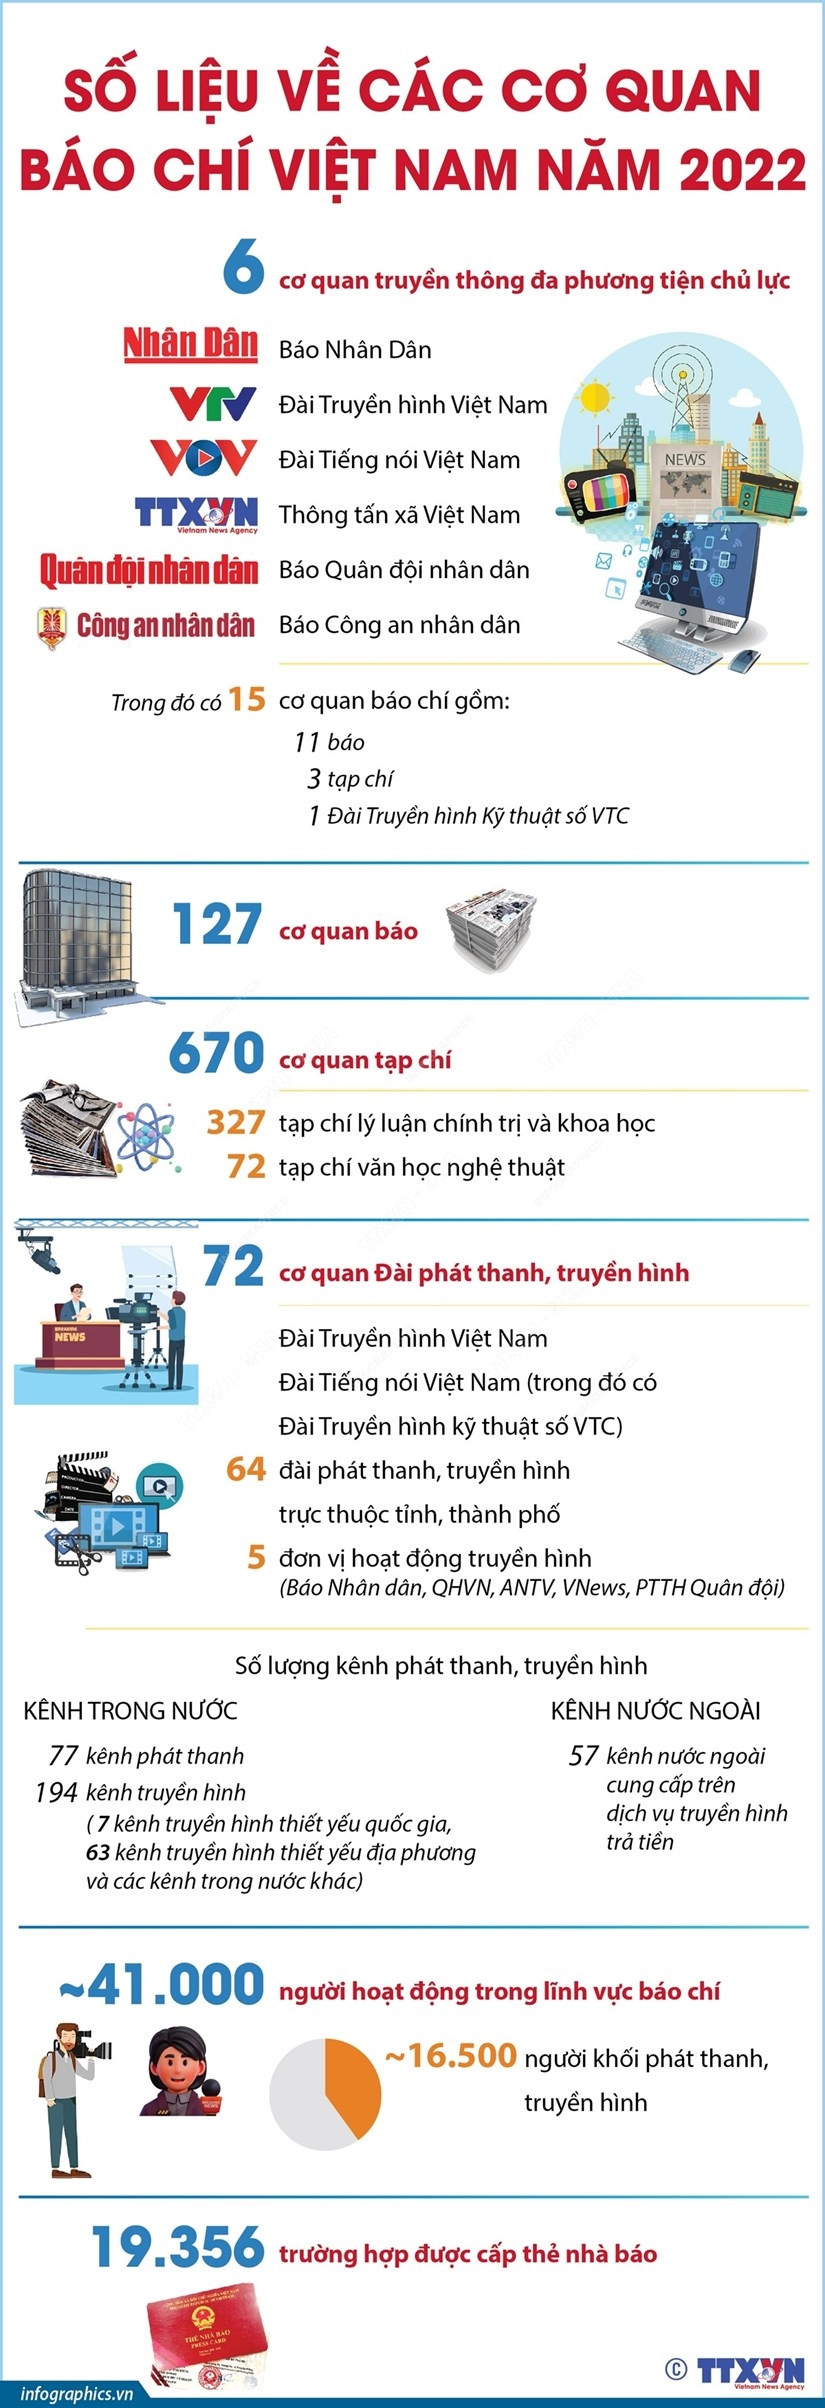 [Infographics] So lieu ve cac co quan bao chi Viet Nam nam 2022 hinh anh 1